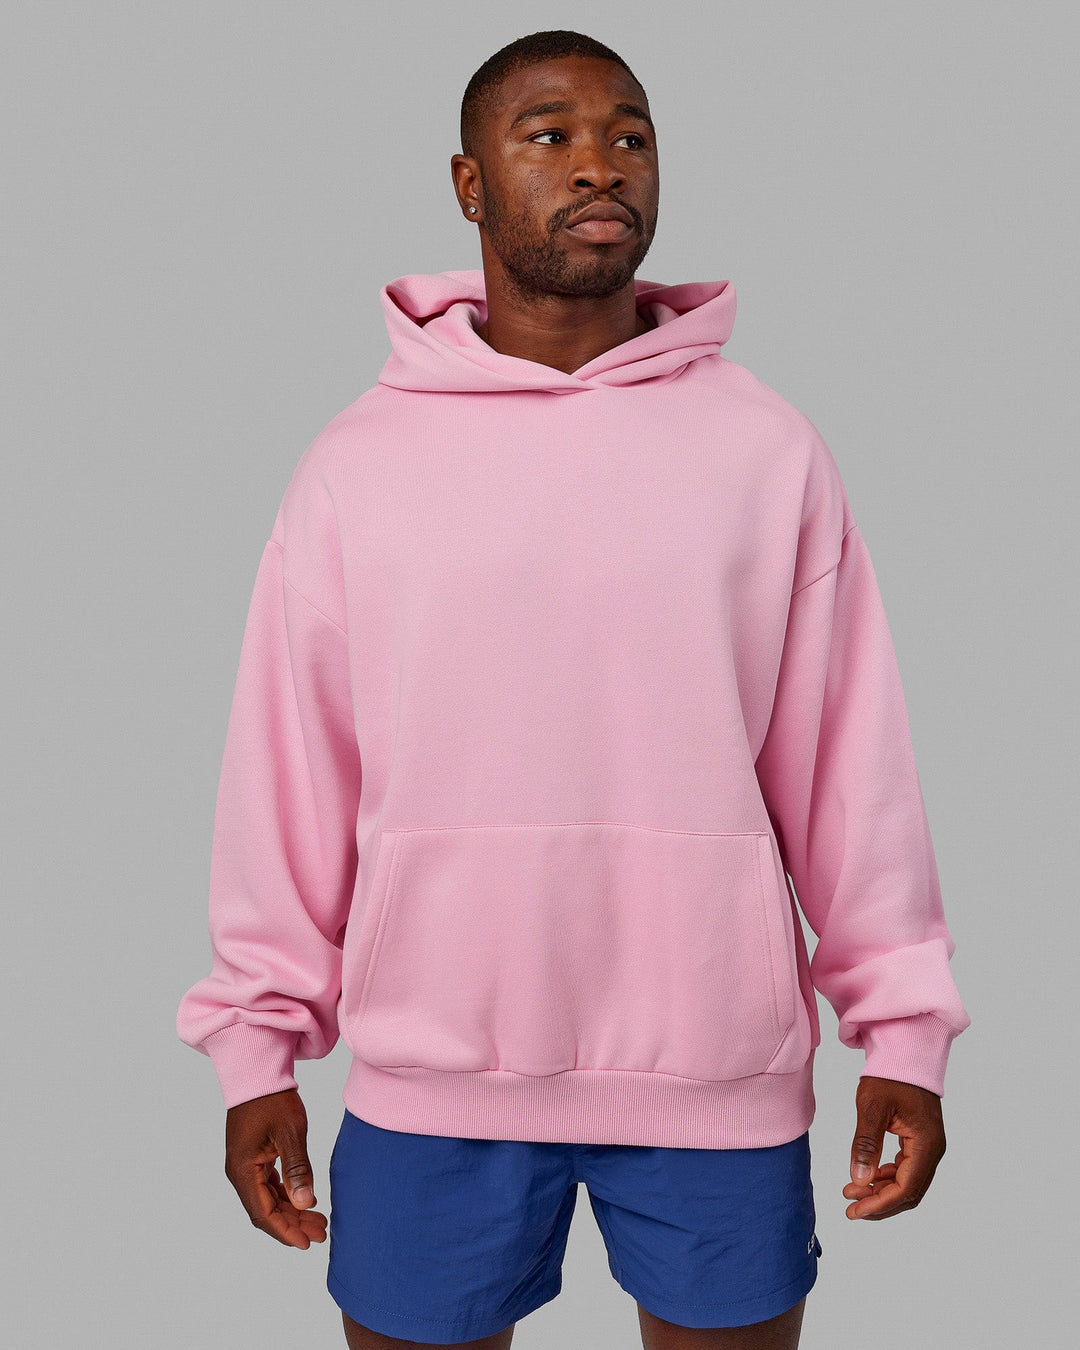 Man wearing wearing Unisex Urban Hoodie Oversize - Pink Frosting-Galactic Blue